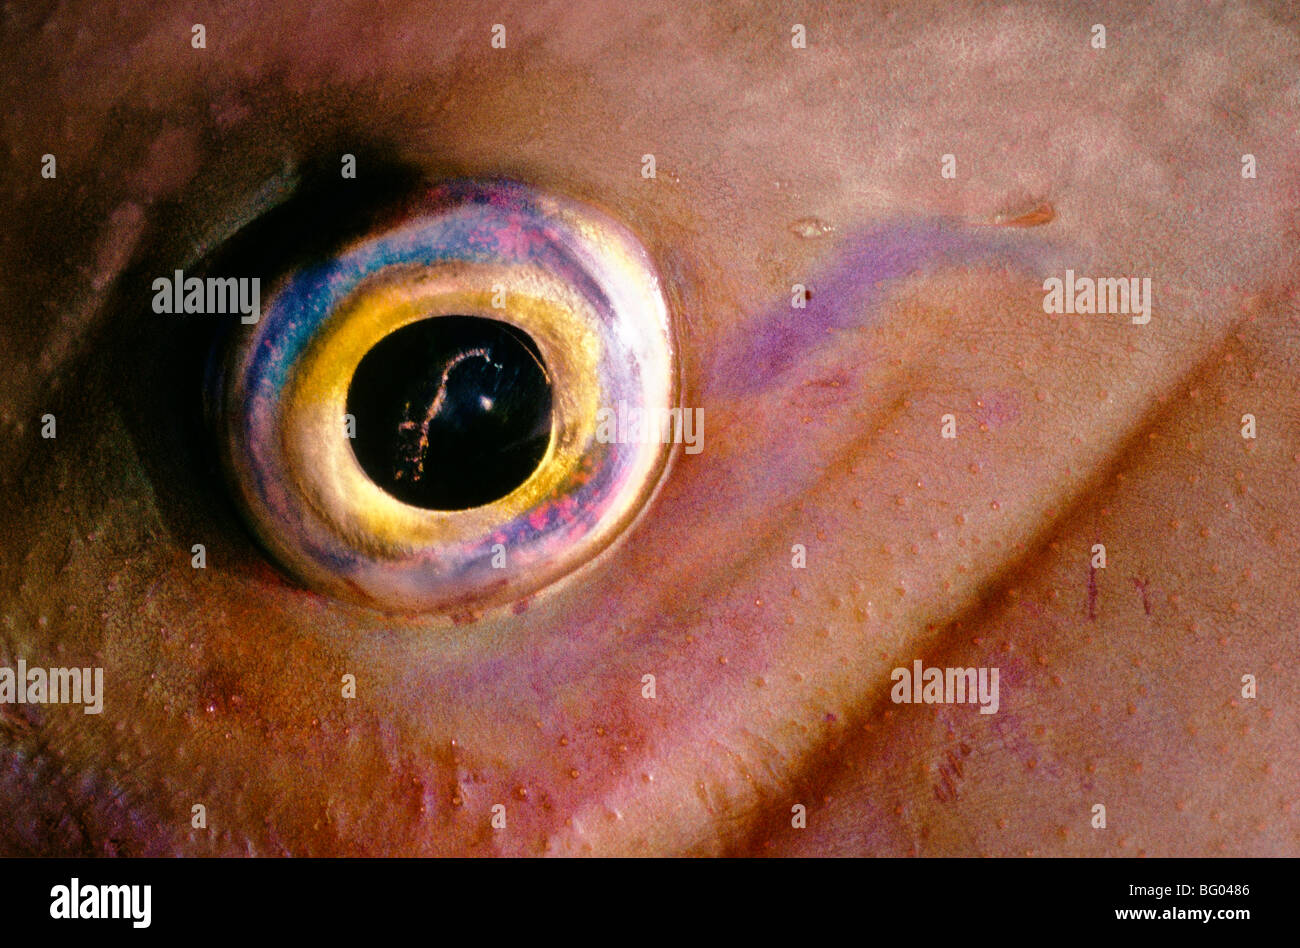 Baldchin groper fish eye Australia Stock Photo